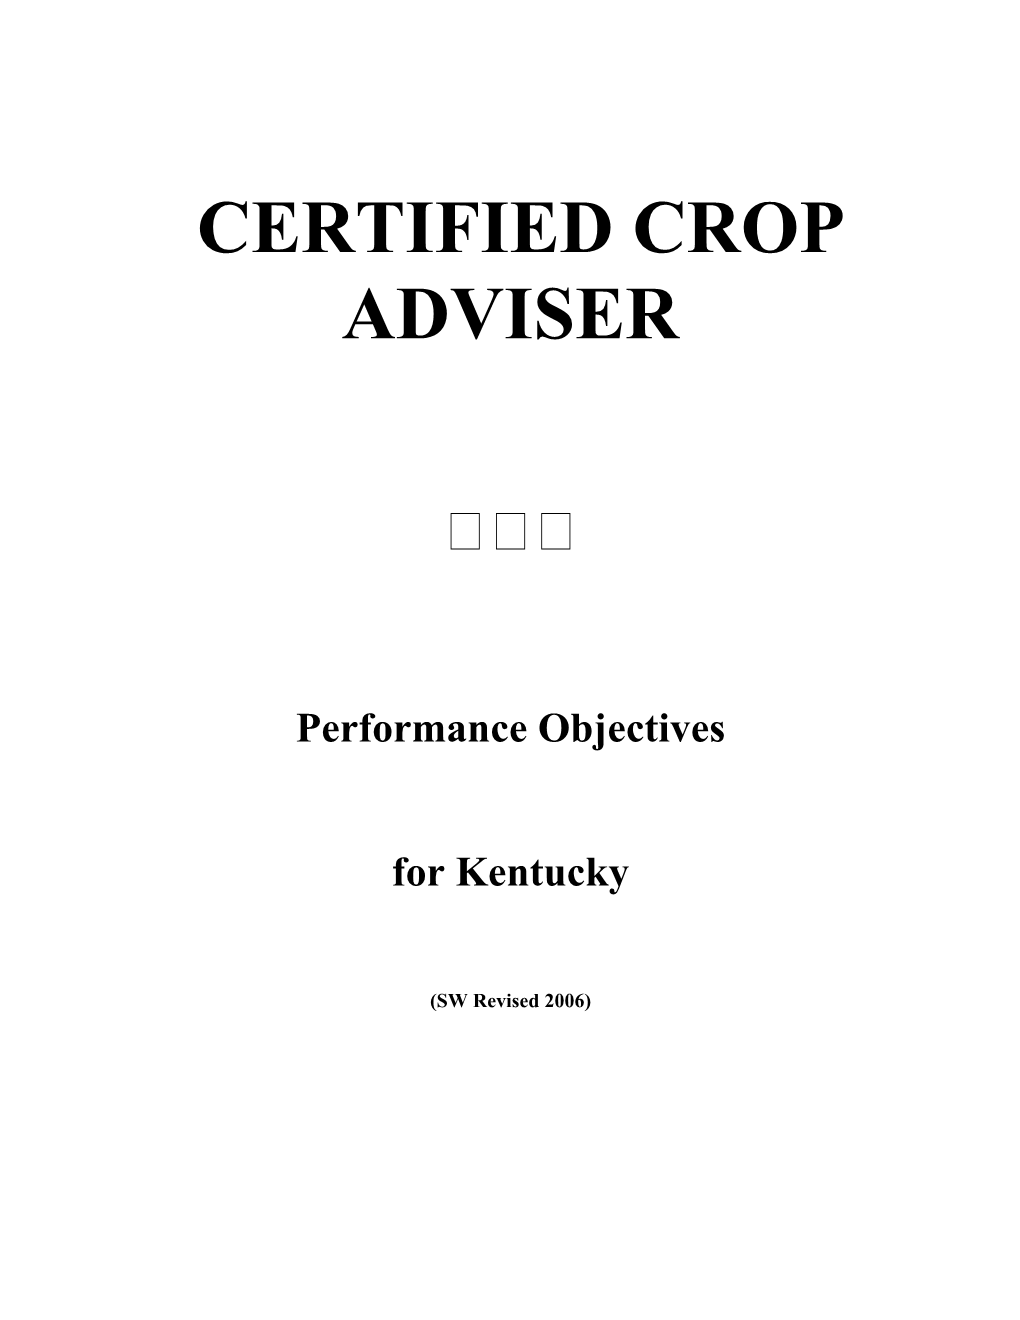 Kentucky CCA Performance Objectives